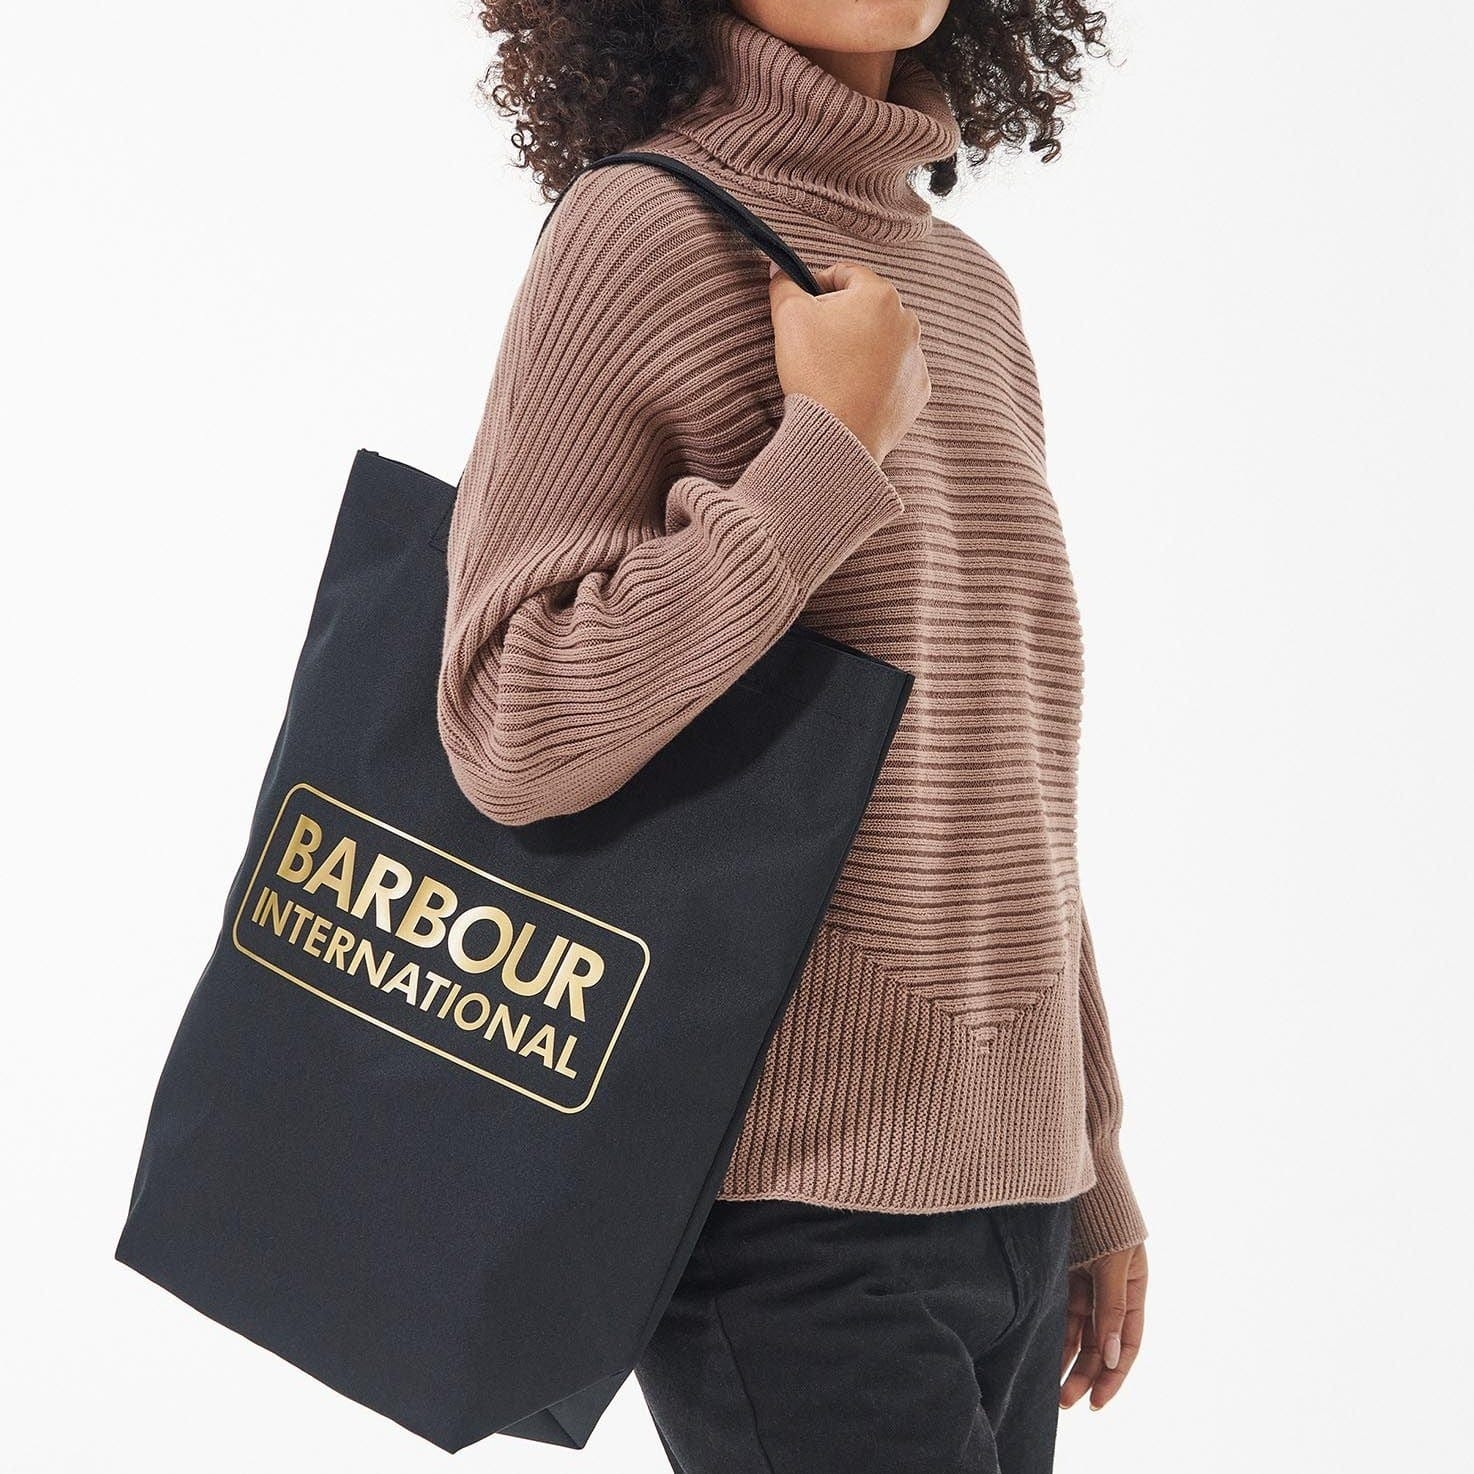 Barbour International Apex Shopper in Black